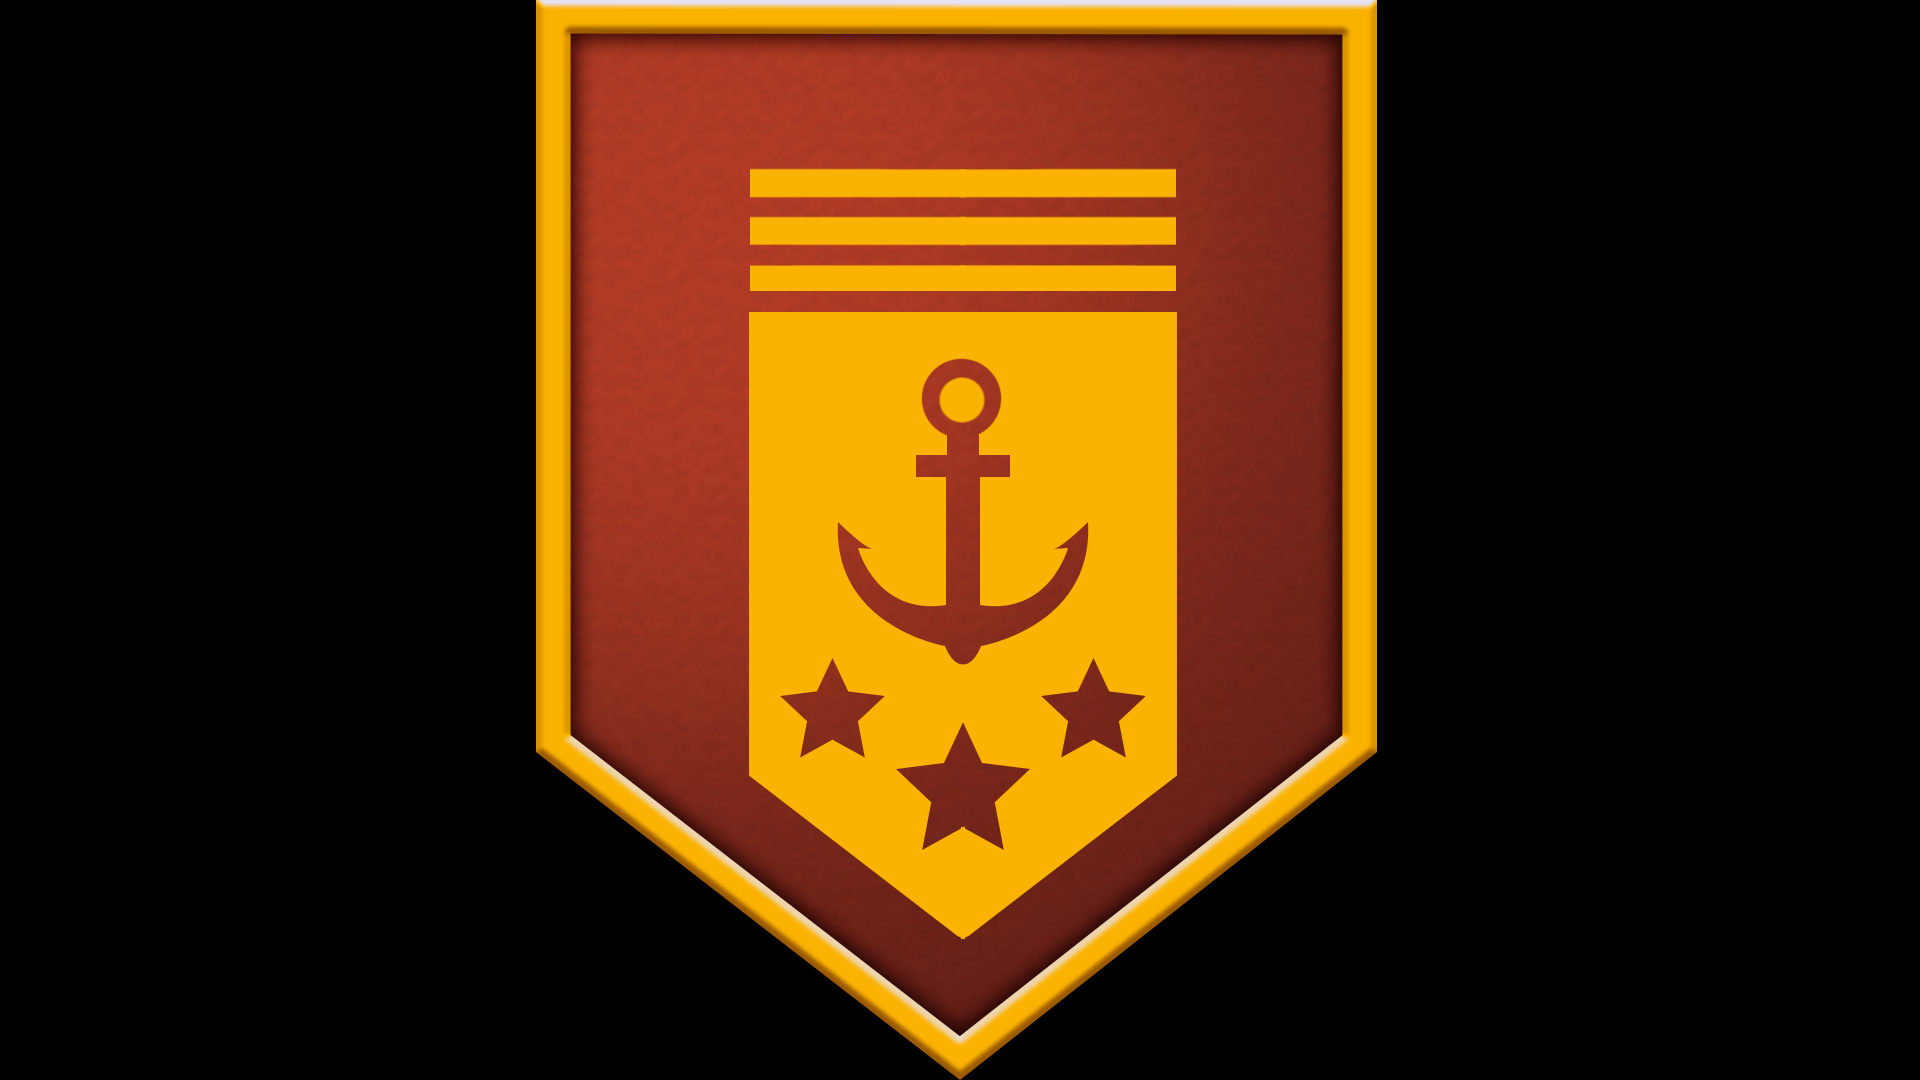 Icon for A True Marine